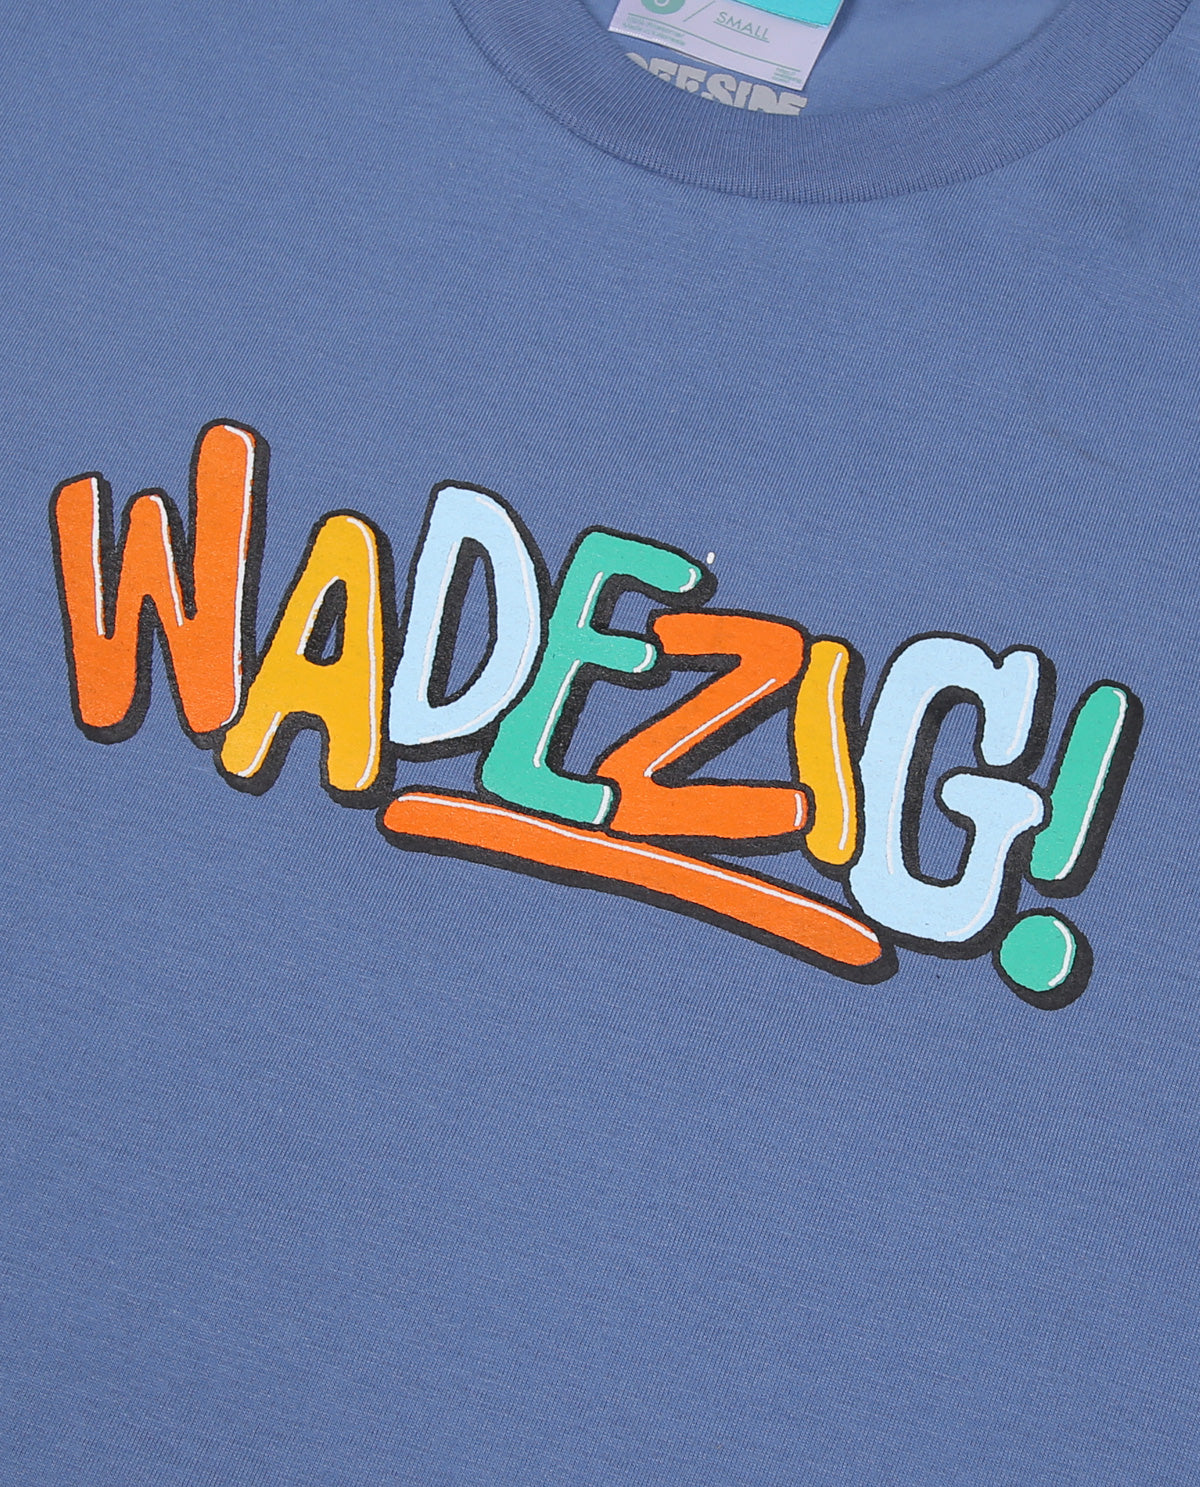 Wadezig! T-Shirt - So What Steel Blue